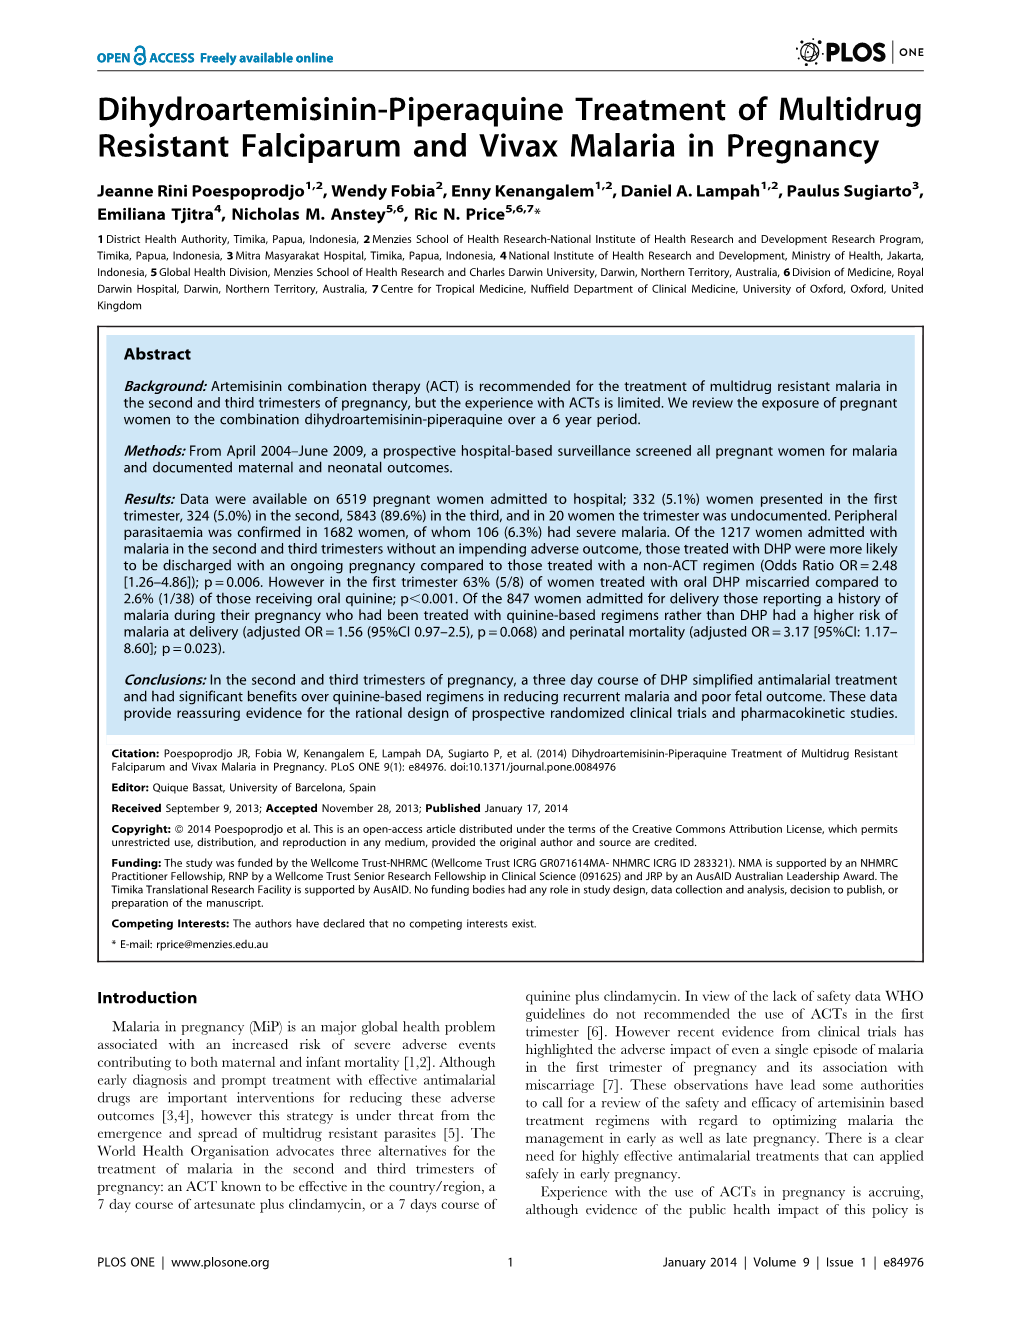 Dihydroartemisinin-Piperaquine Treatment of Multidrug Resistant Falciparum and Vivax Malaria in Pregnancy